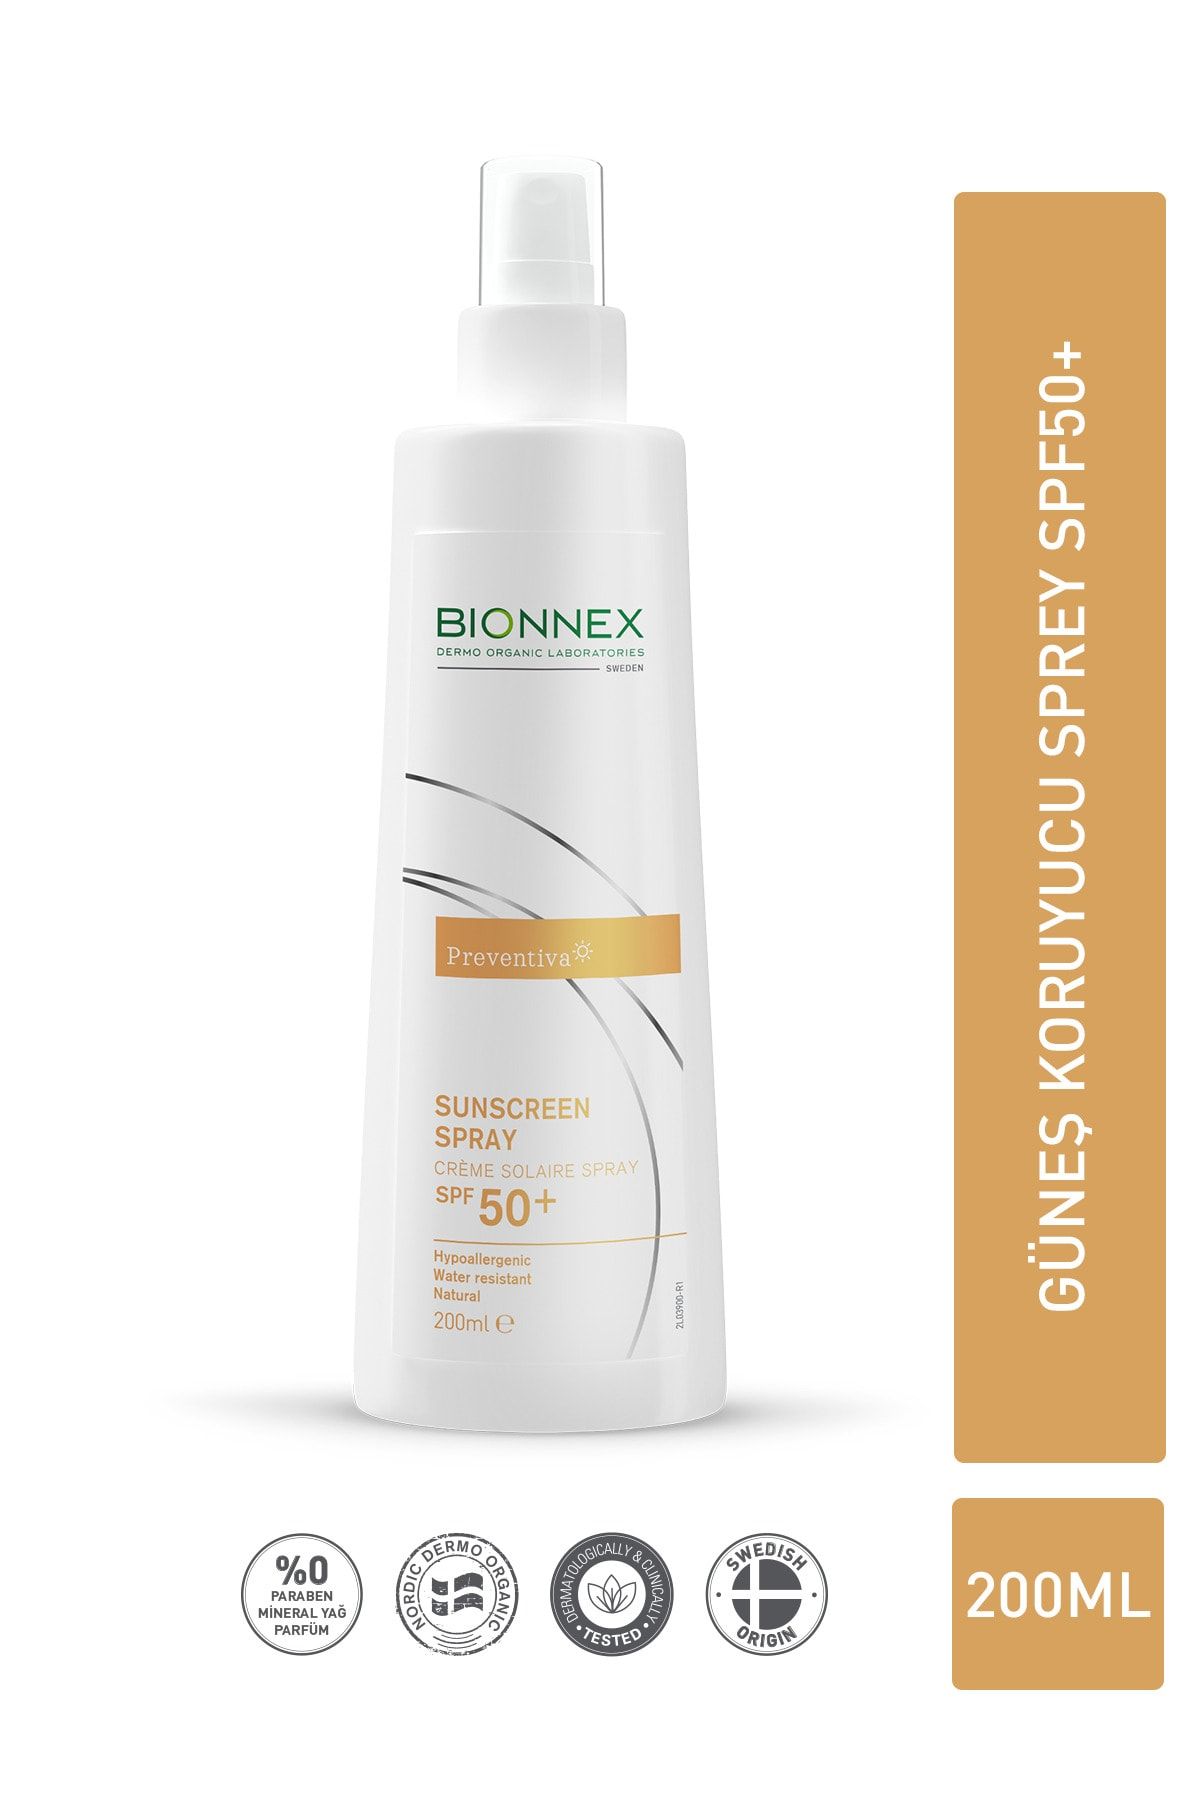 Bionnex Preventiva Sunscreen Spray Spf50